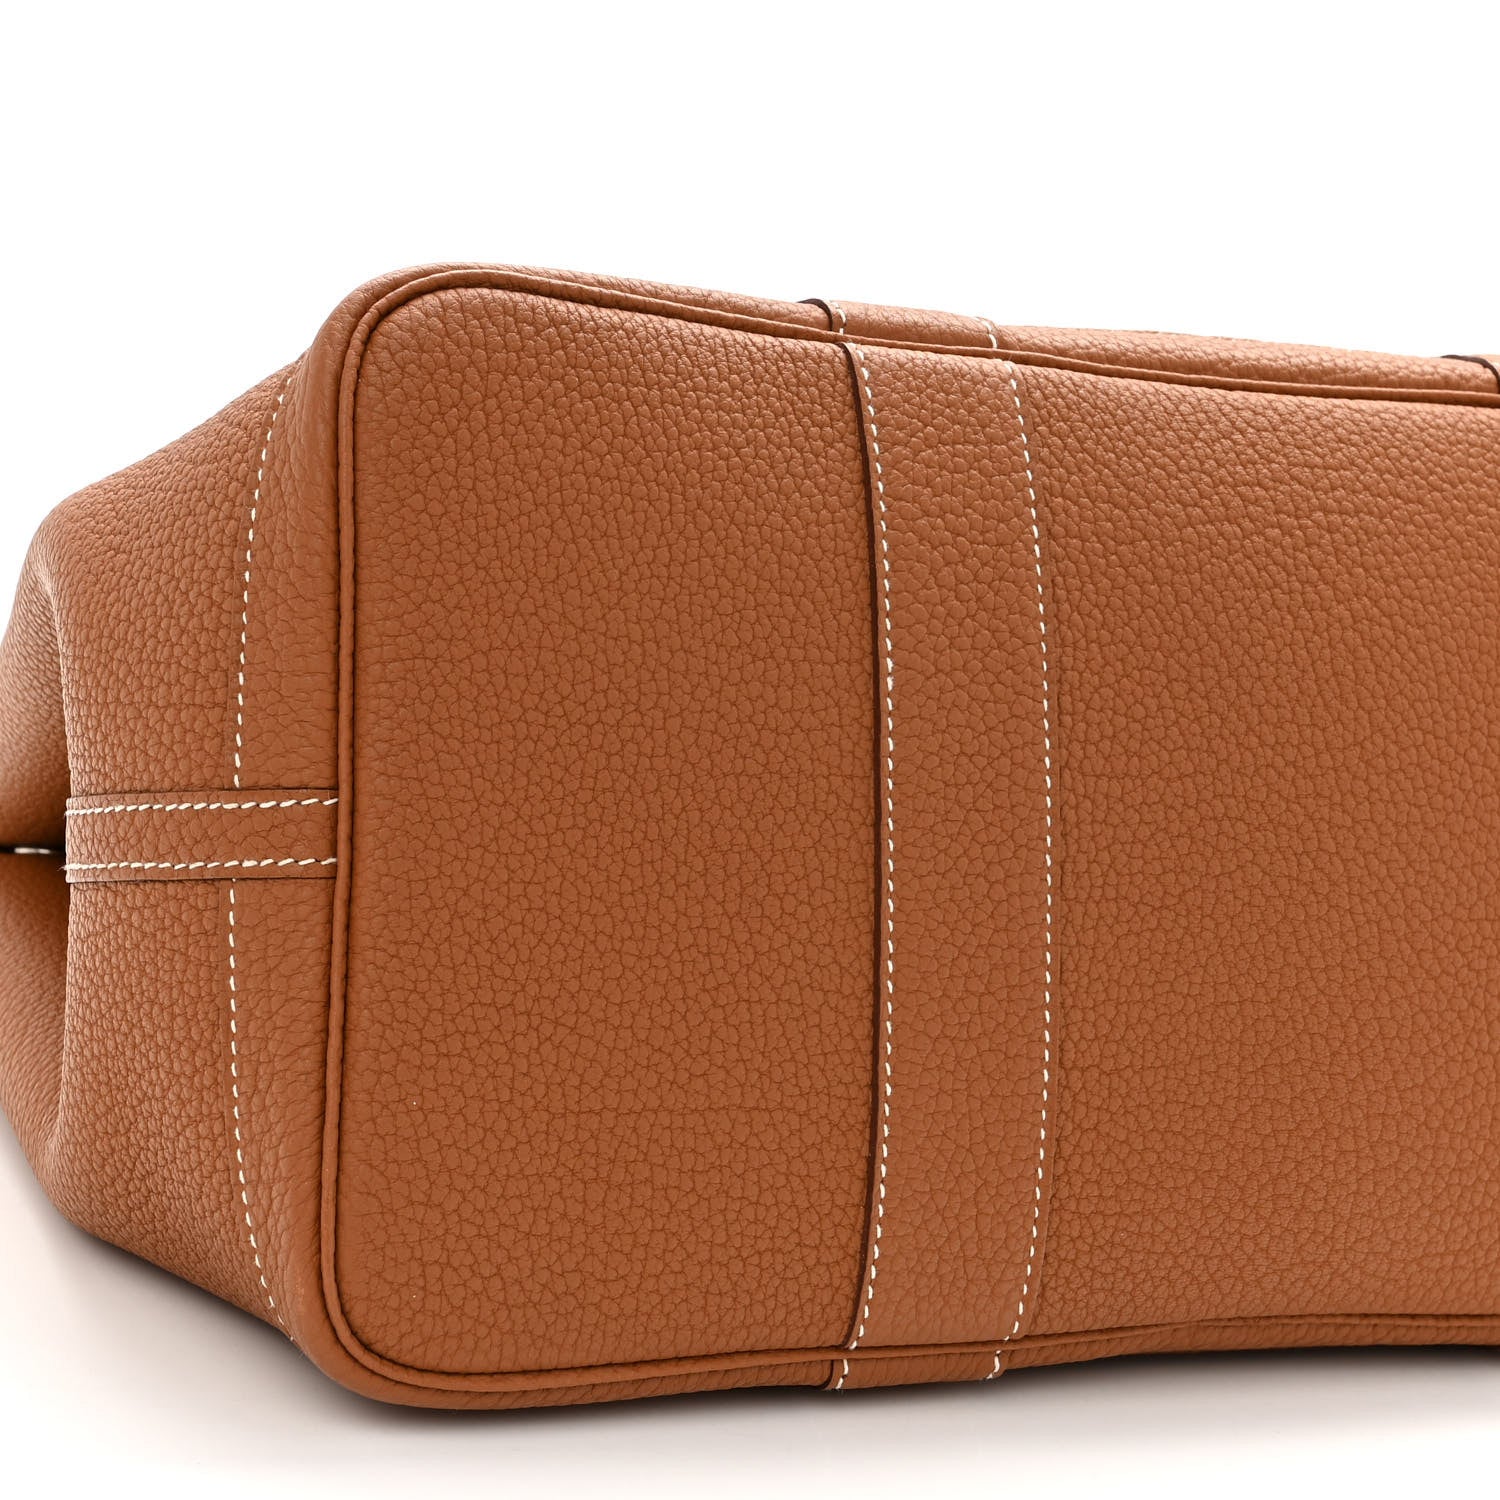 Tanneries Du Puy 🇫🇷 - Negonda - Luxury Shrunken Calf Leather (SAMPLES)